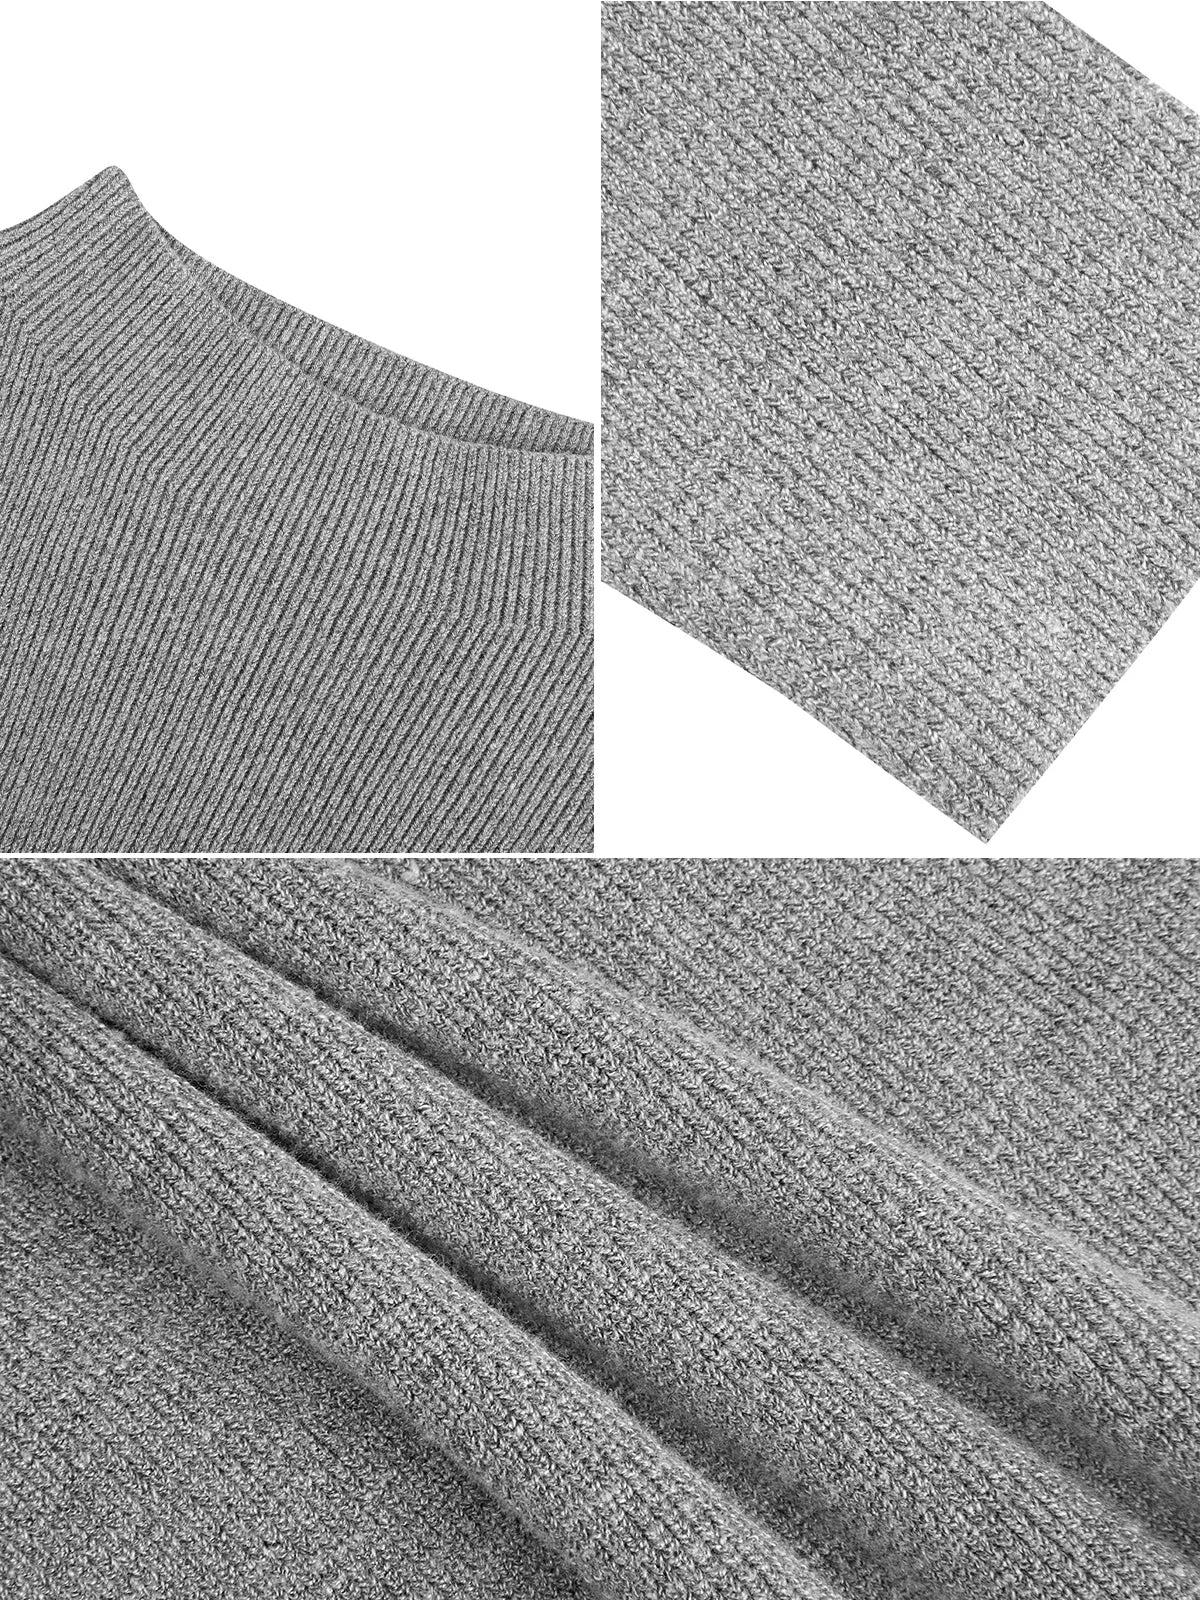 Distinctive style! Gray semi-turtleneck sweater with asymmetric  design, enchanting lace mesh embellishments, showcasing unique charm.